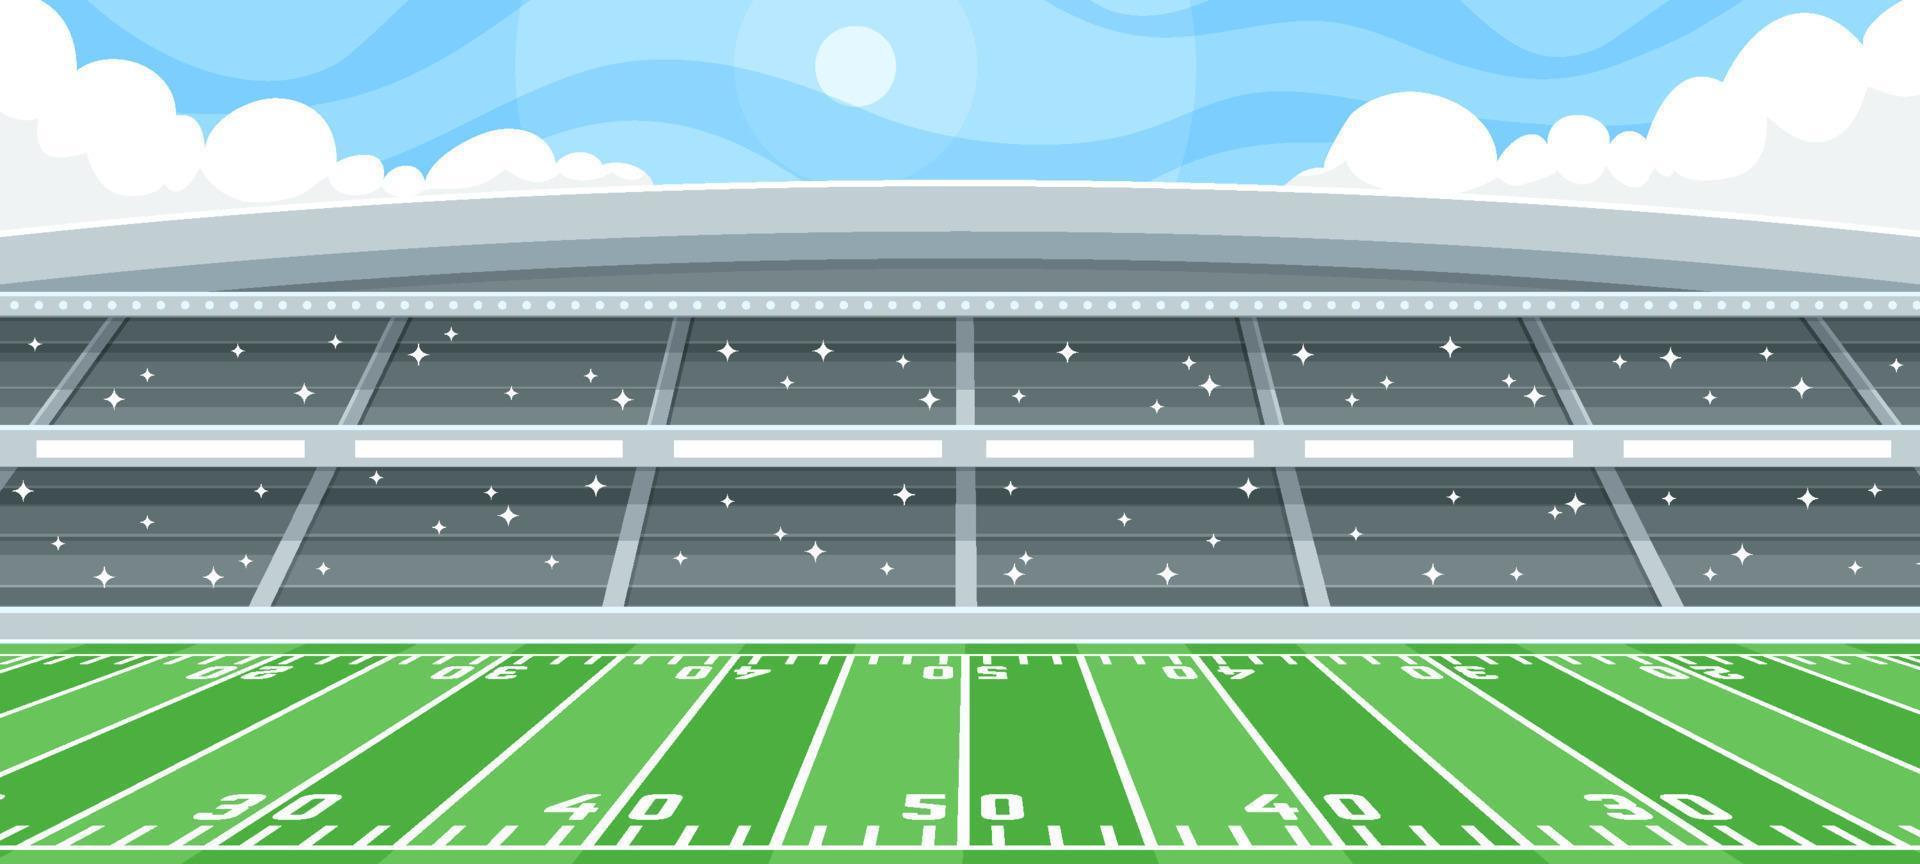 Football Field Background vector